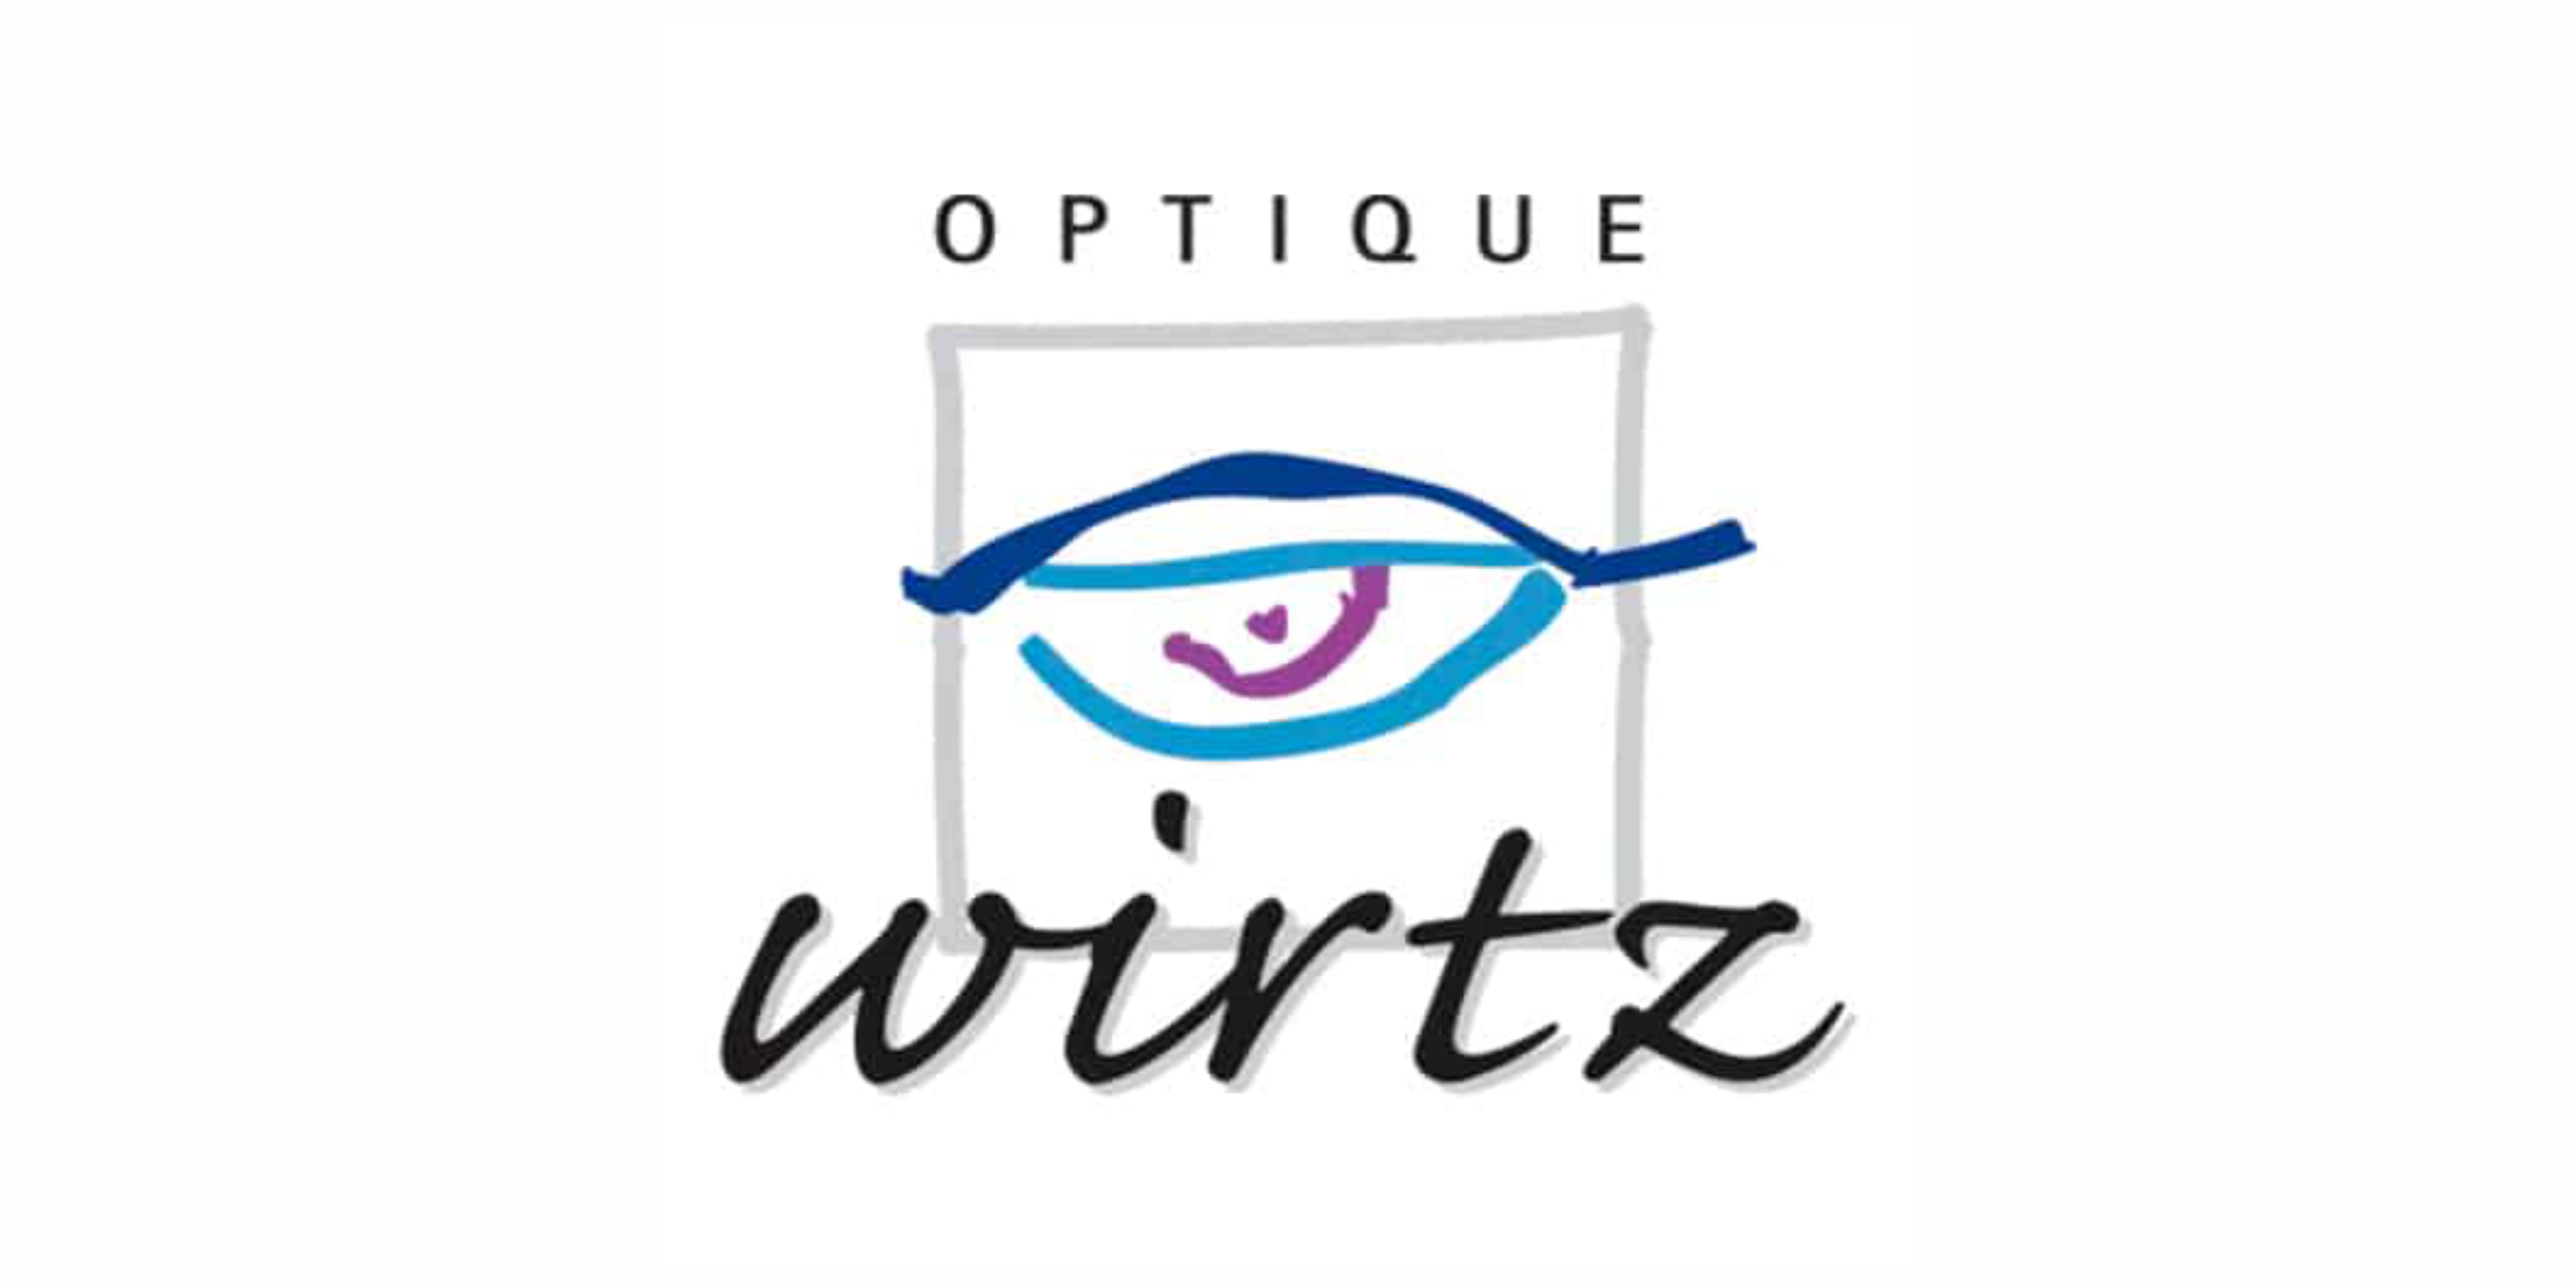 Optique Wirtz